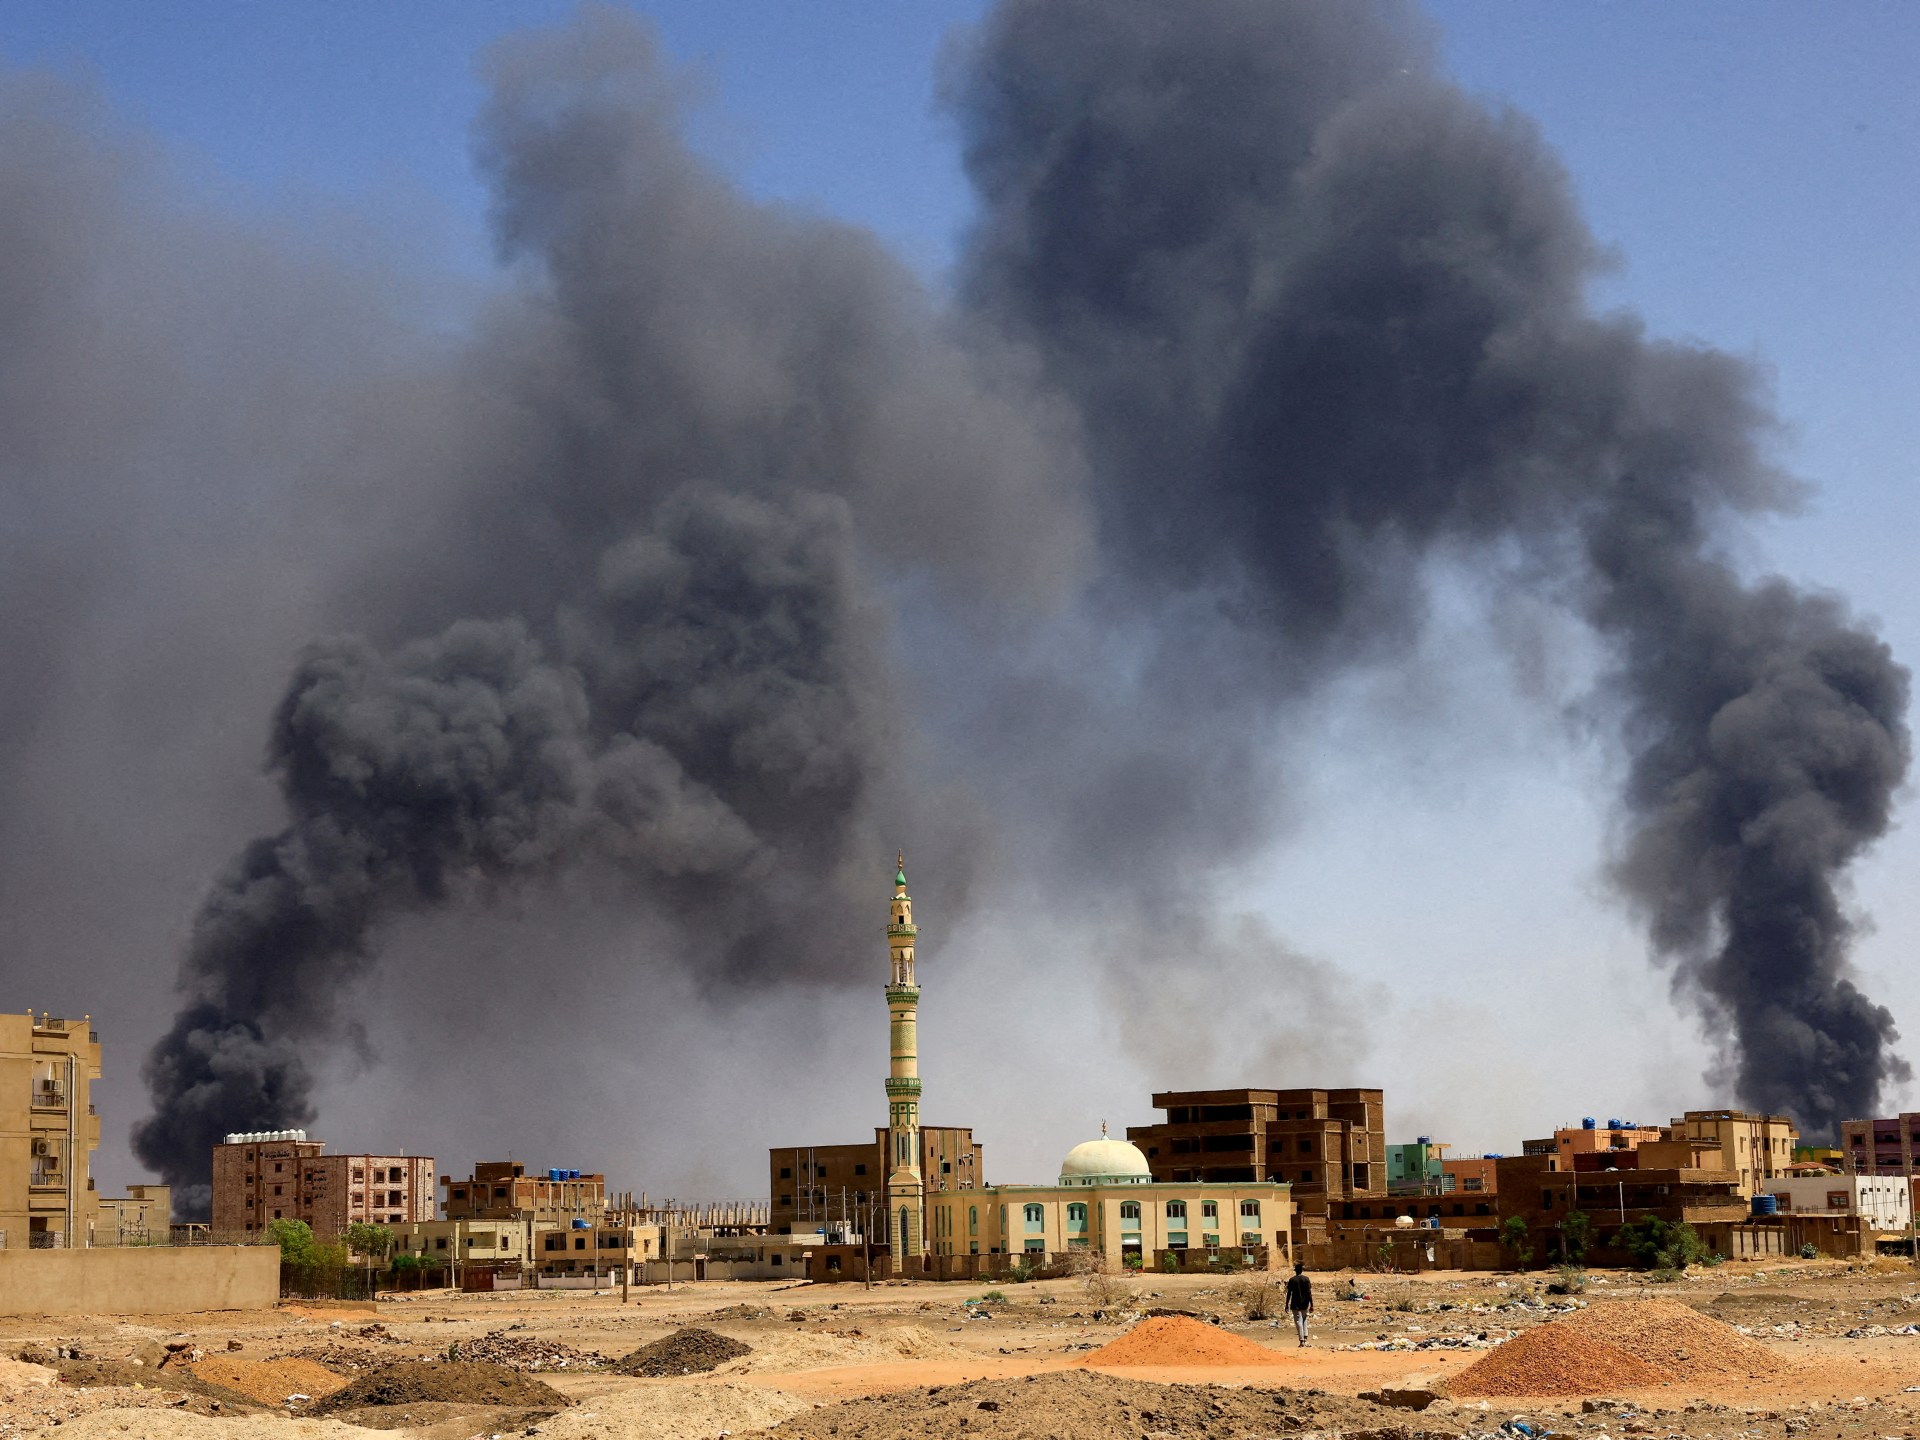 Sudan latest: US sanctions, suspended talks, continued fighting